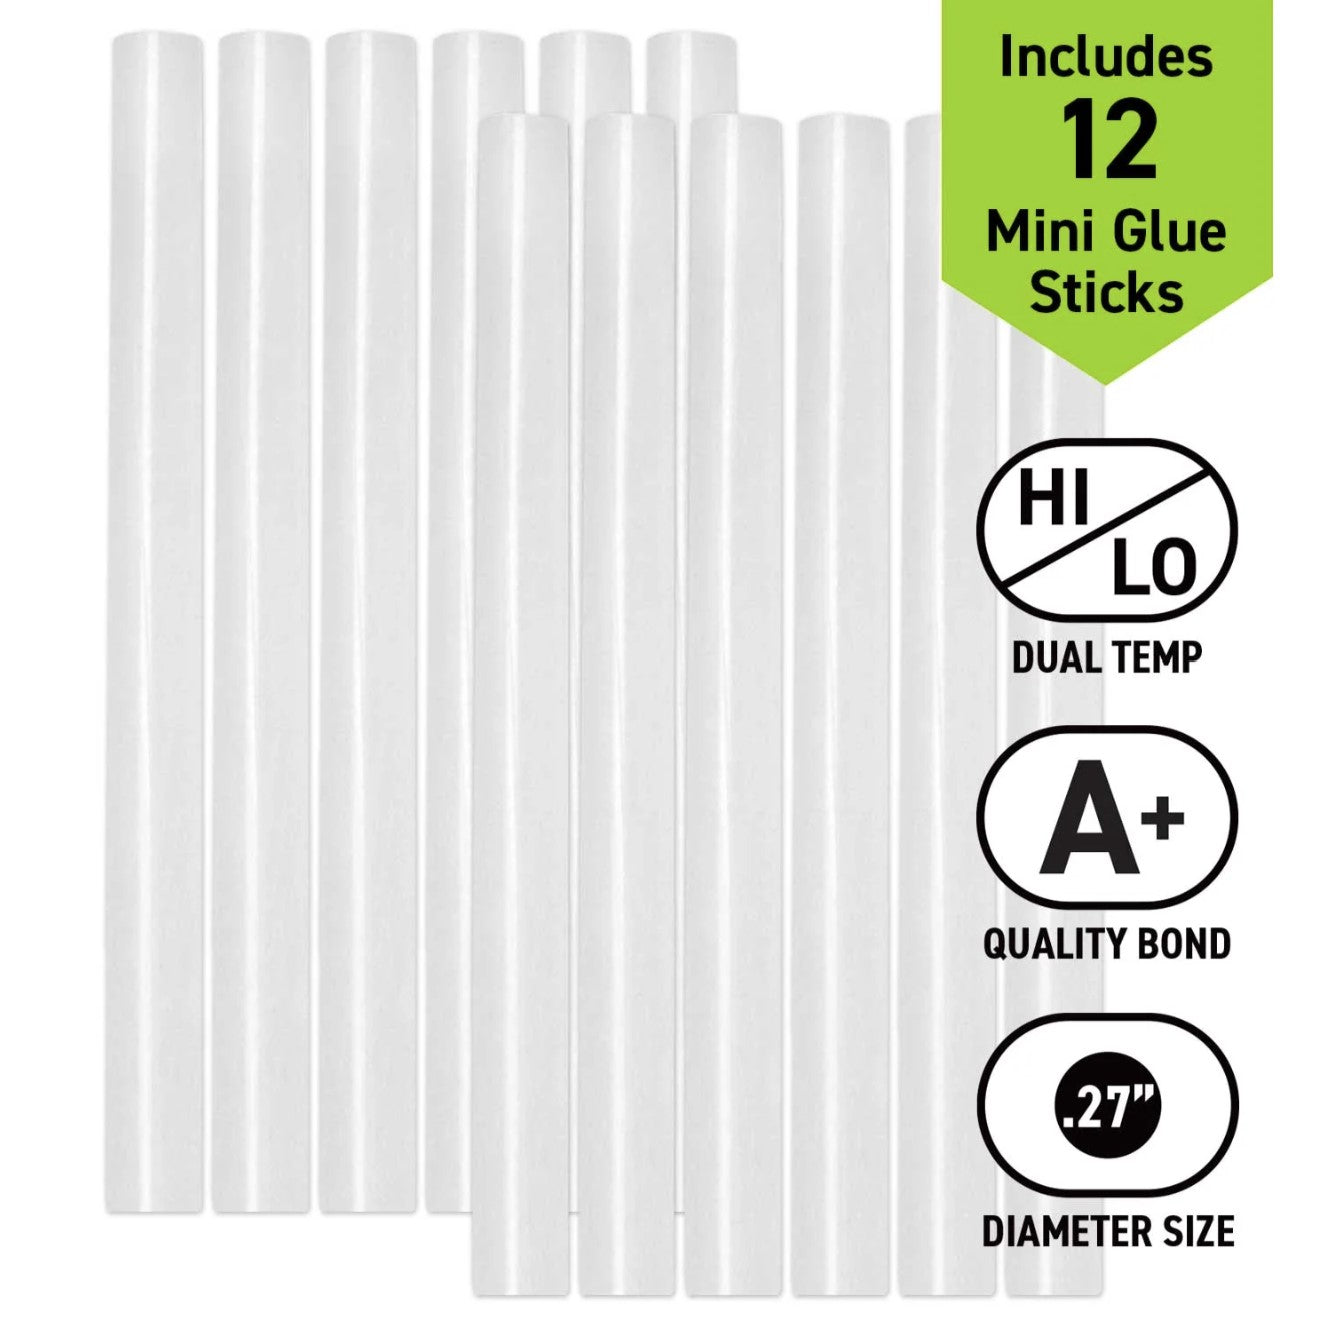 High Temp Kit,  (10 Watt Glue Gun + 12 Glue Sticks), Ref. GM-160FKIT  by Surebonder®